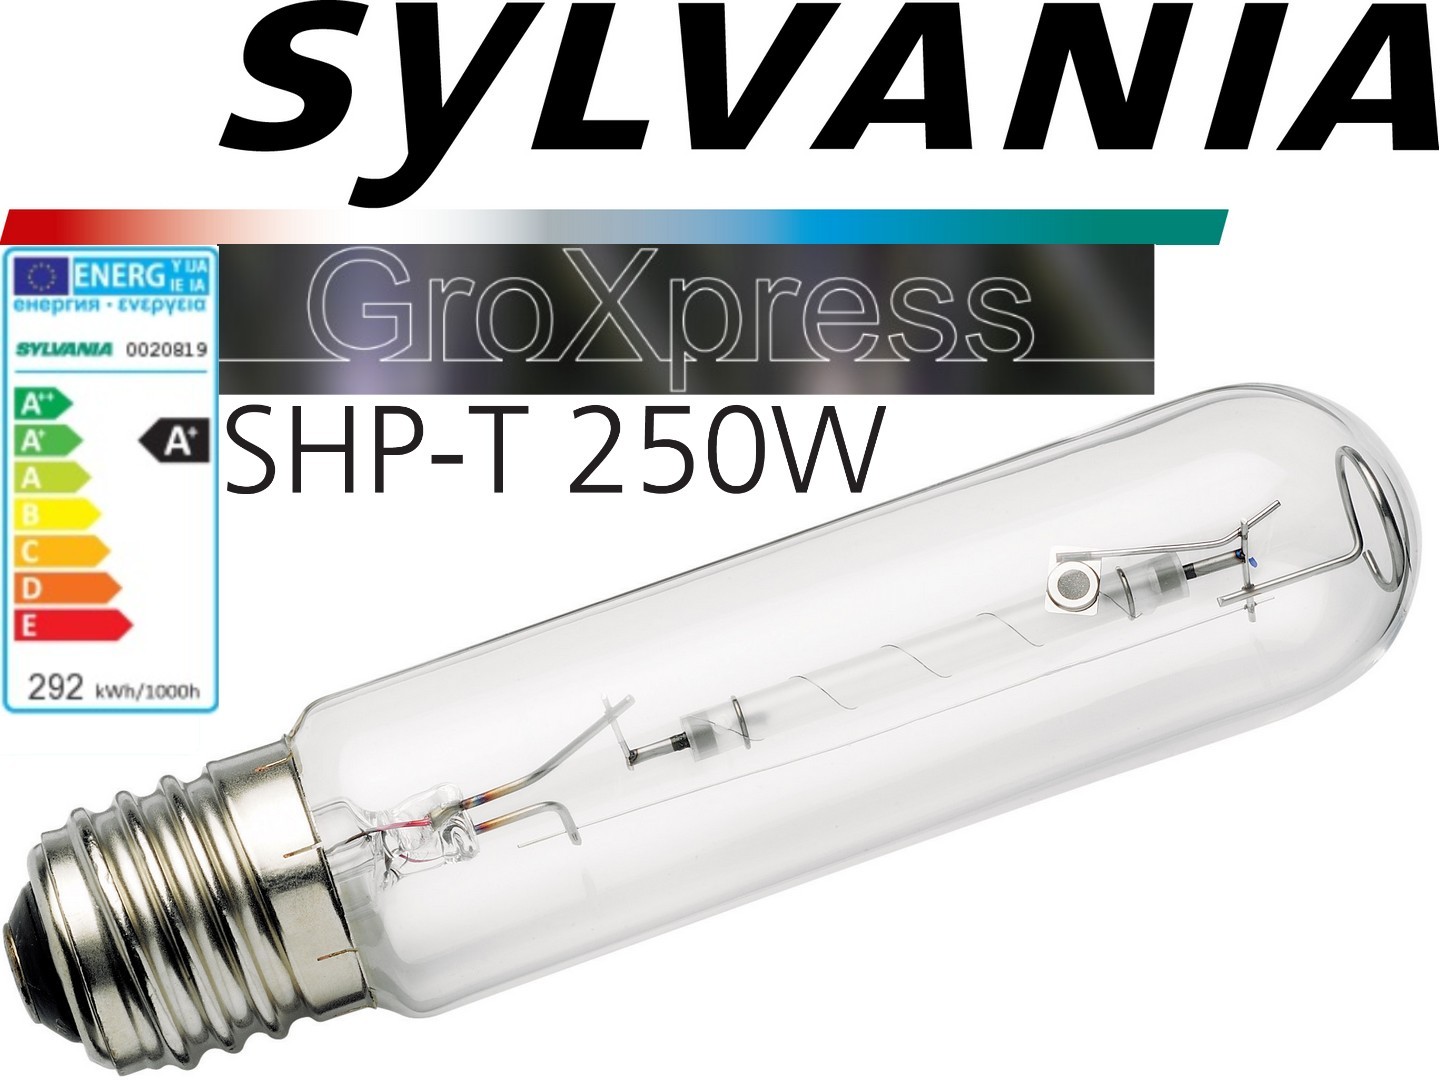 SYLVANIA  SHP -250W GROXPRESS